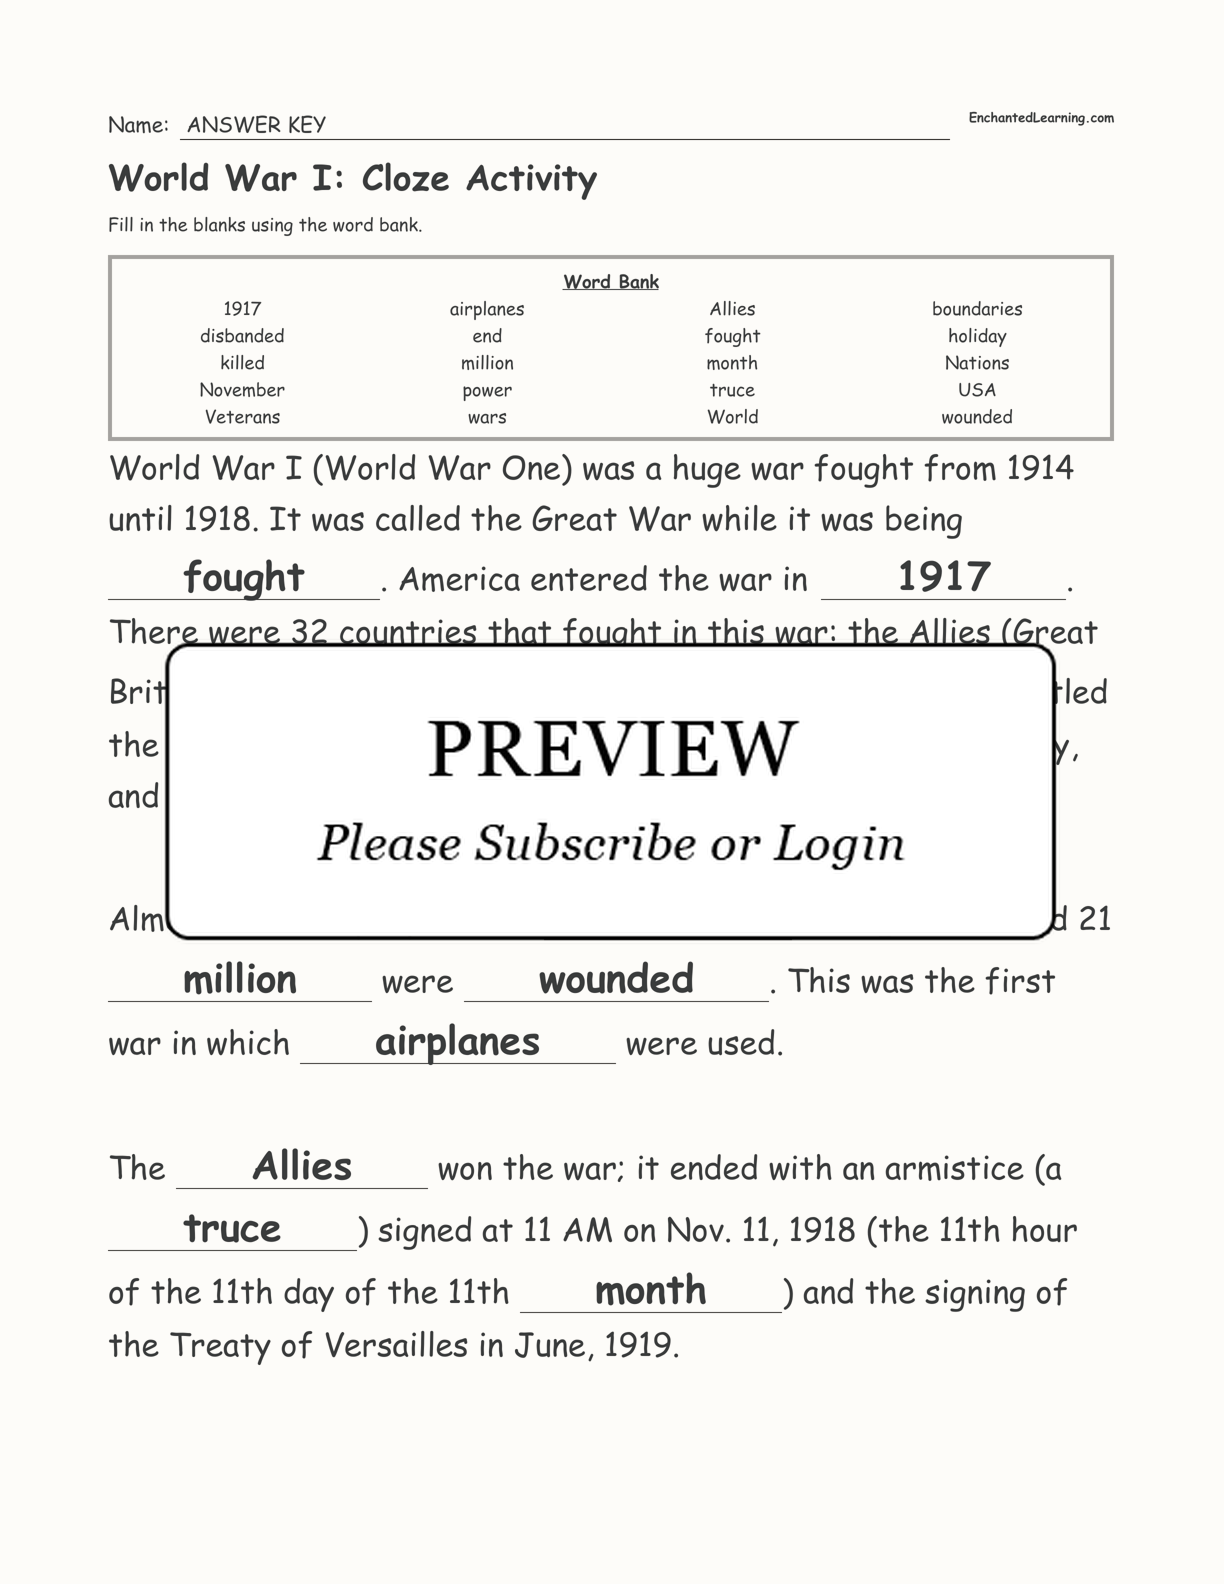 World War I: Cloze Activity interactive worksheet page 3